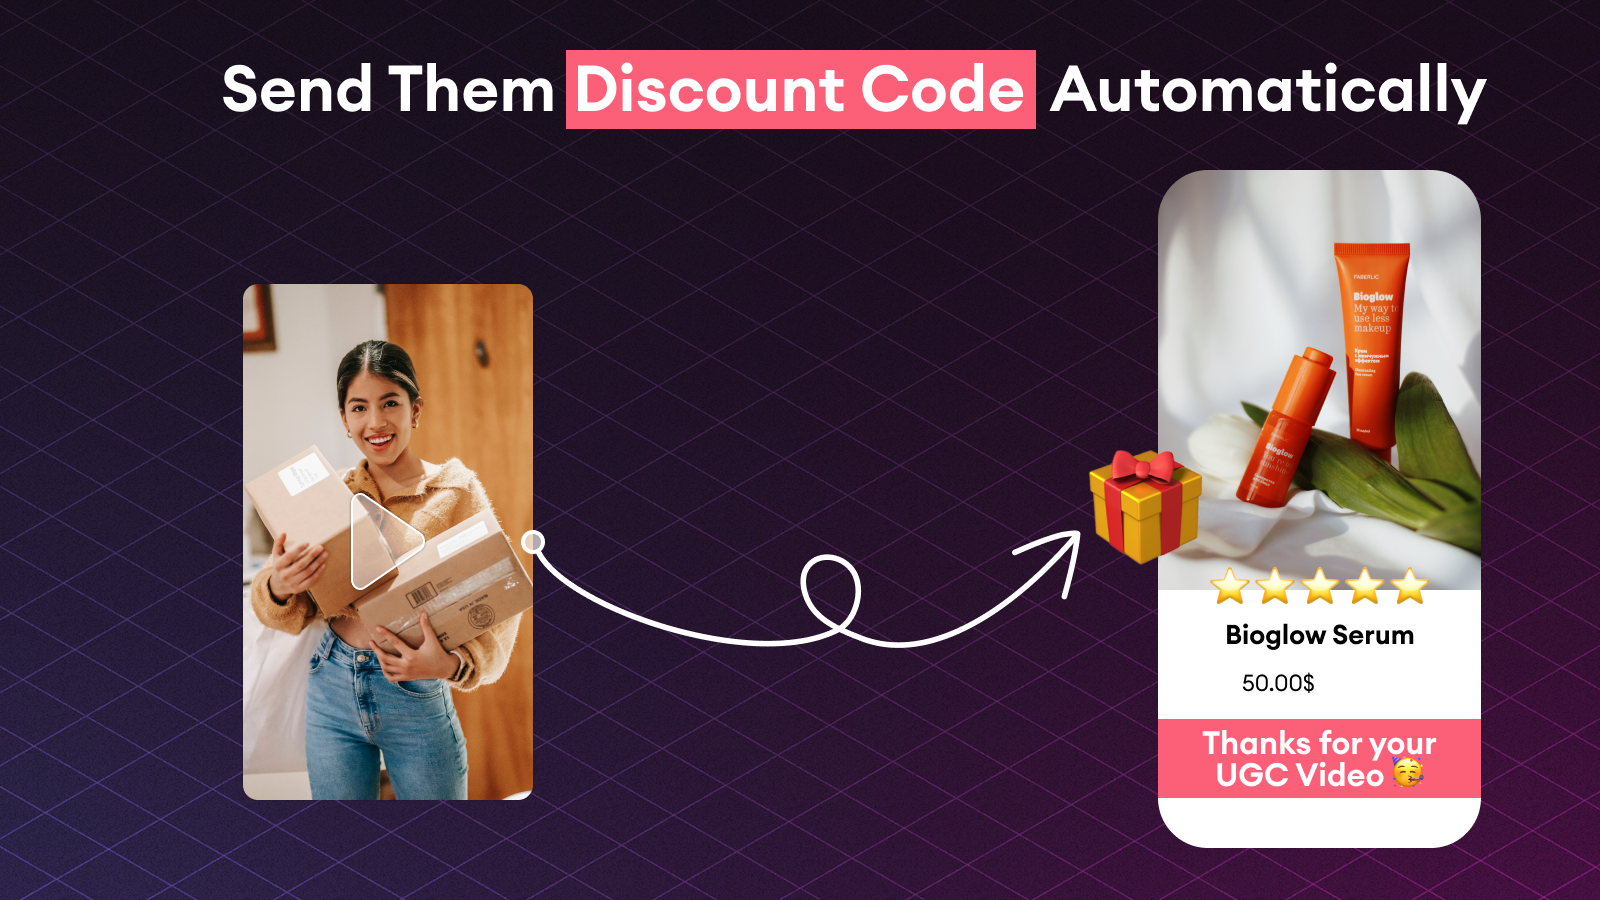 Send them discount code as reward